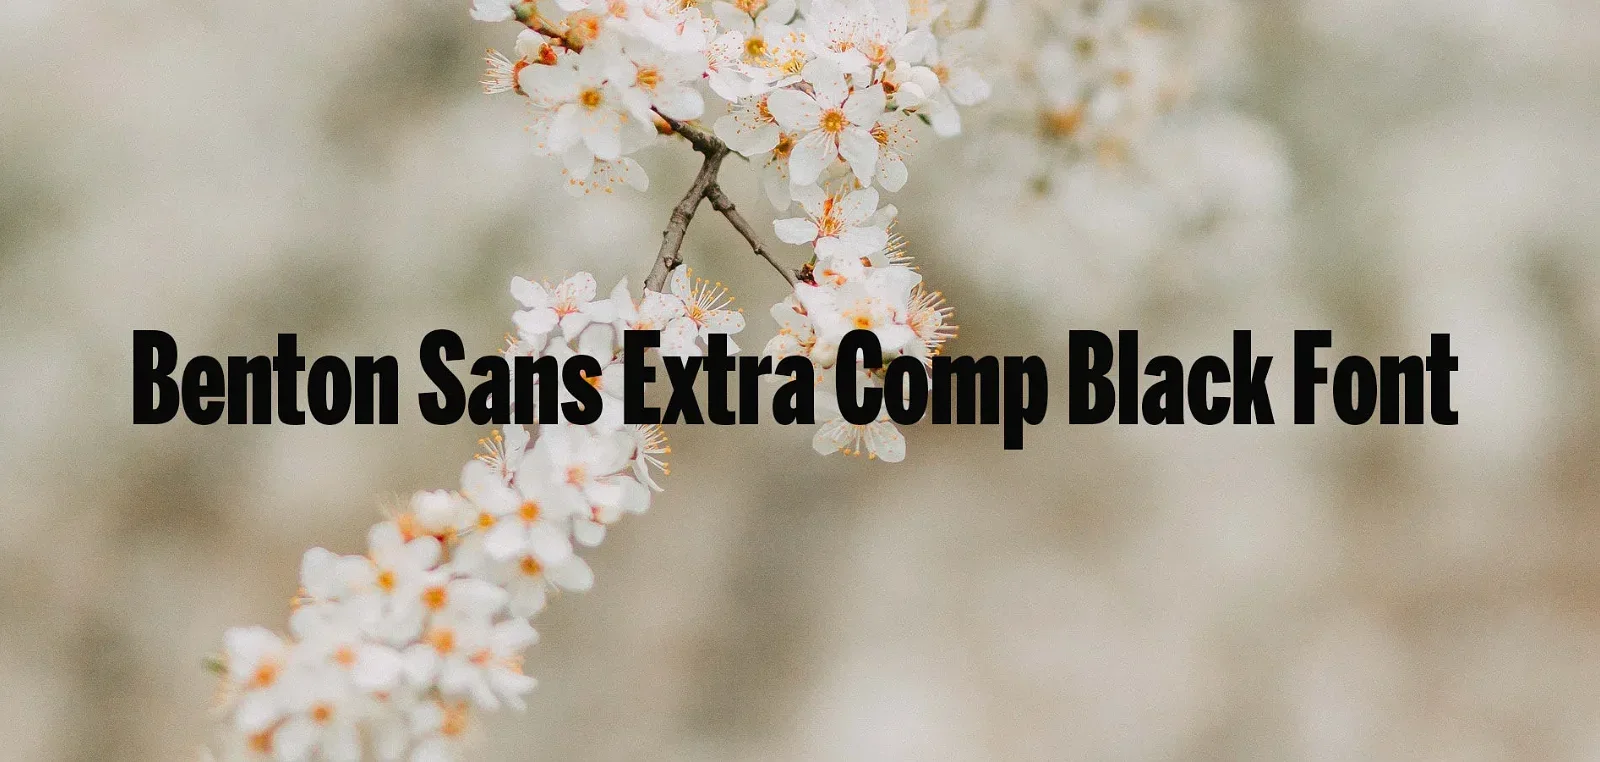 Benton Sans Extra Comp Black Font